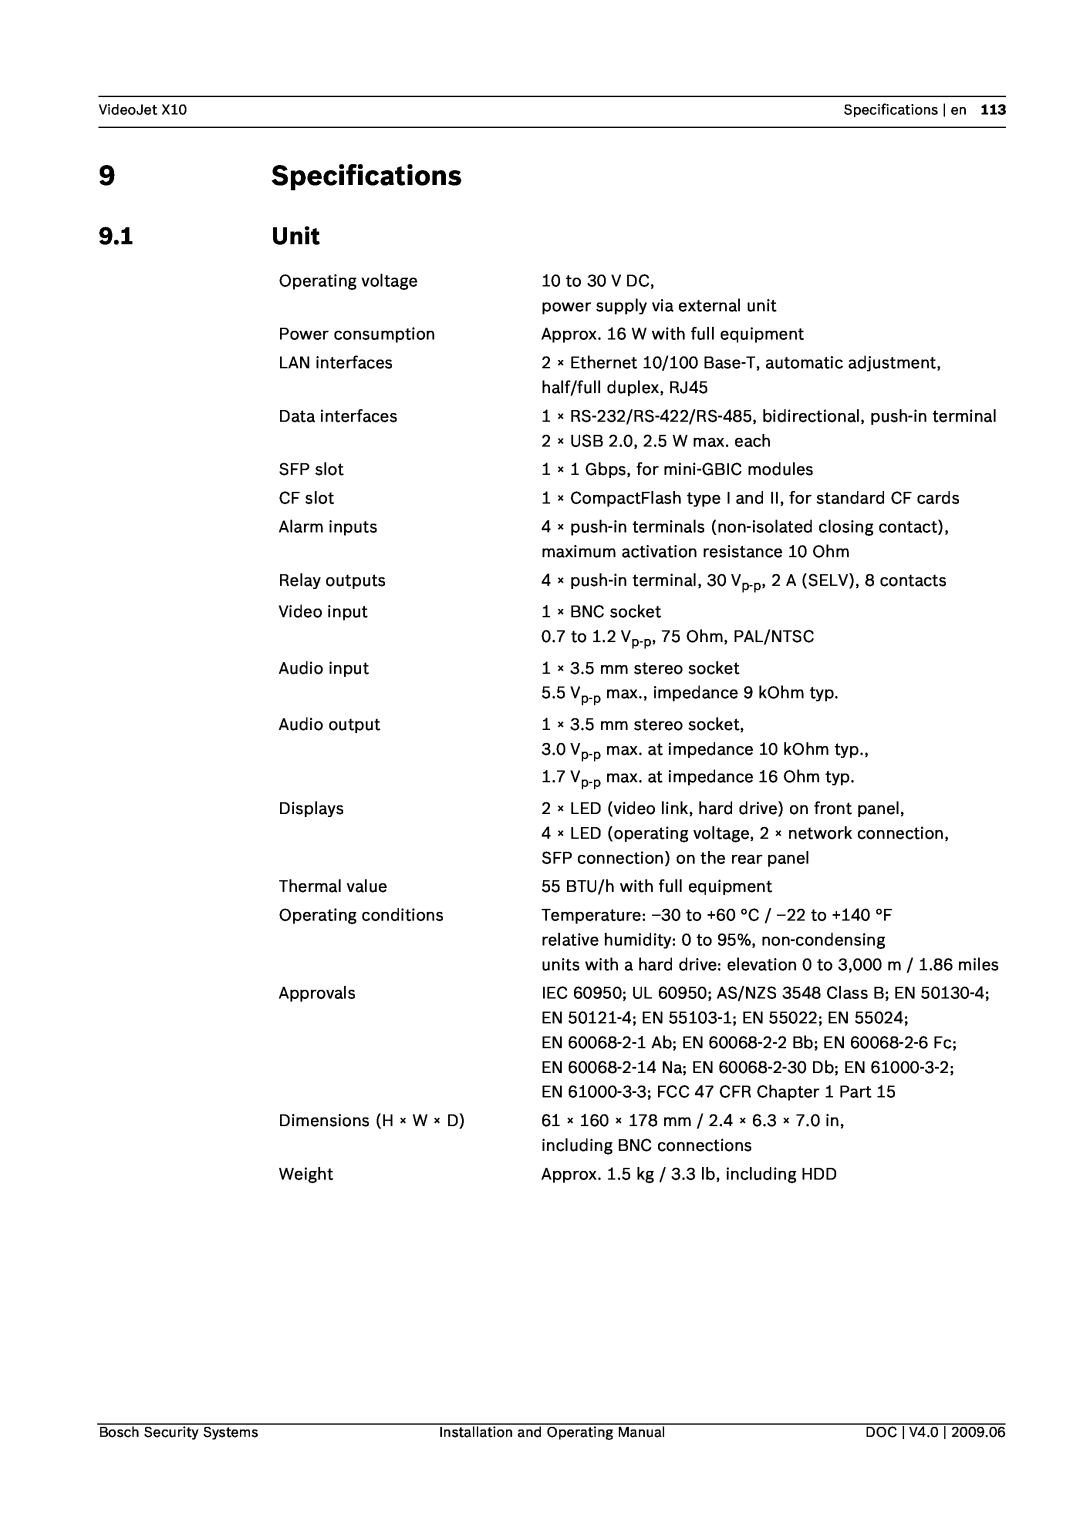 Bosch Appliances X10 manual Specifications, Unit 